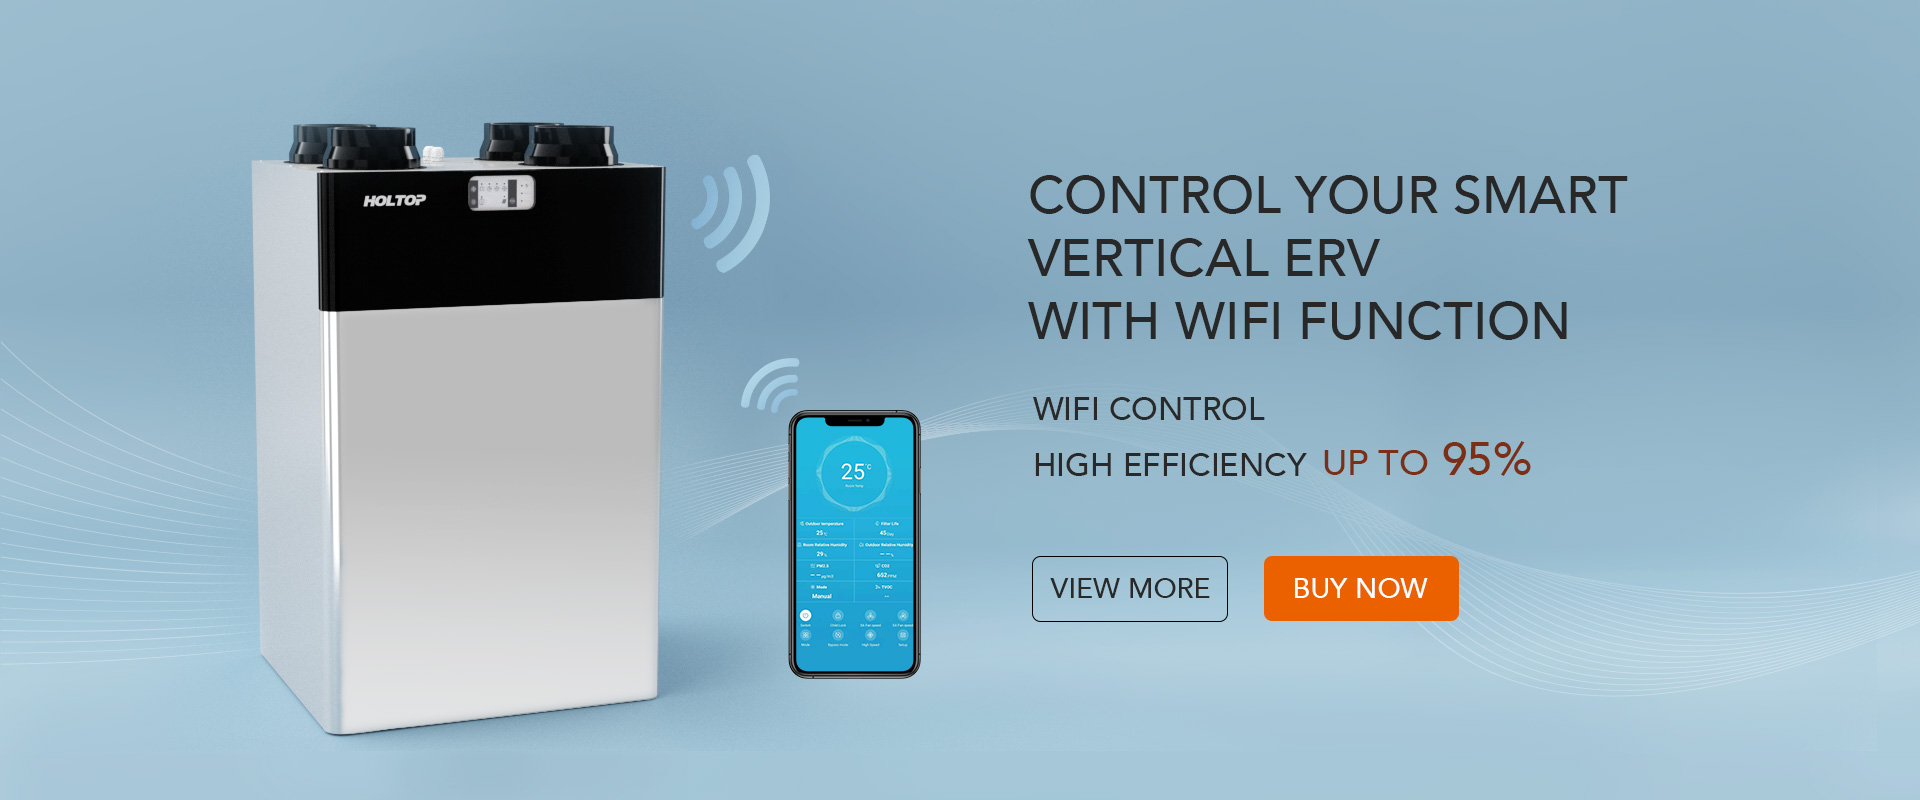 Holtop อัพเกรด Smart Vertical HRV พร้อมฟังก์ชั่น WiFi